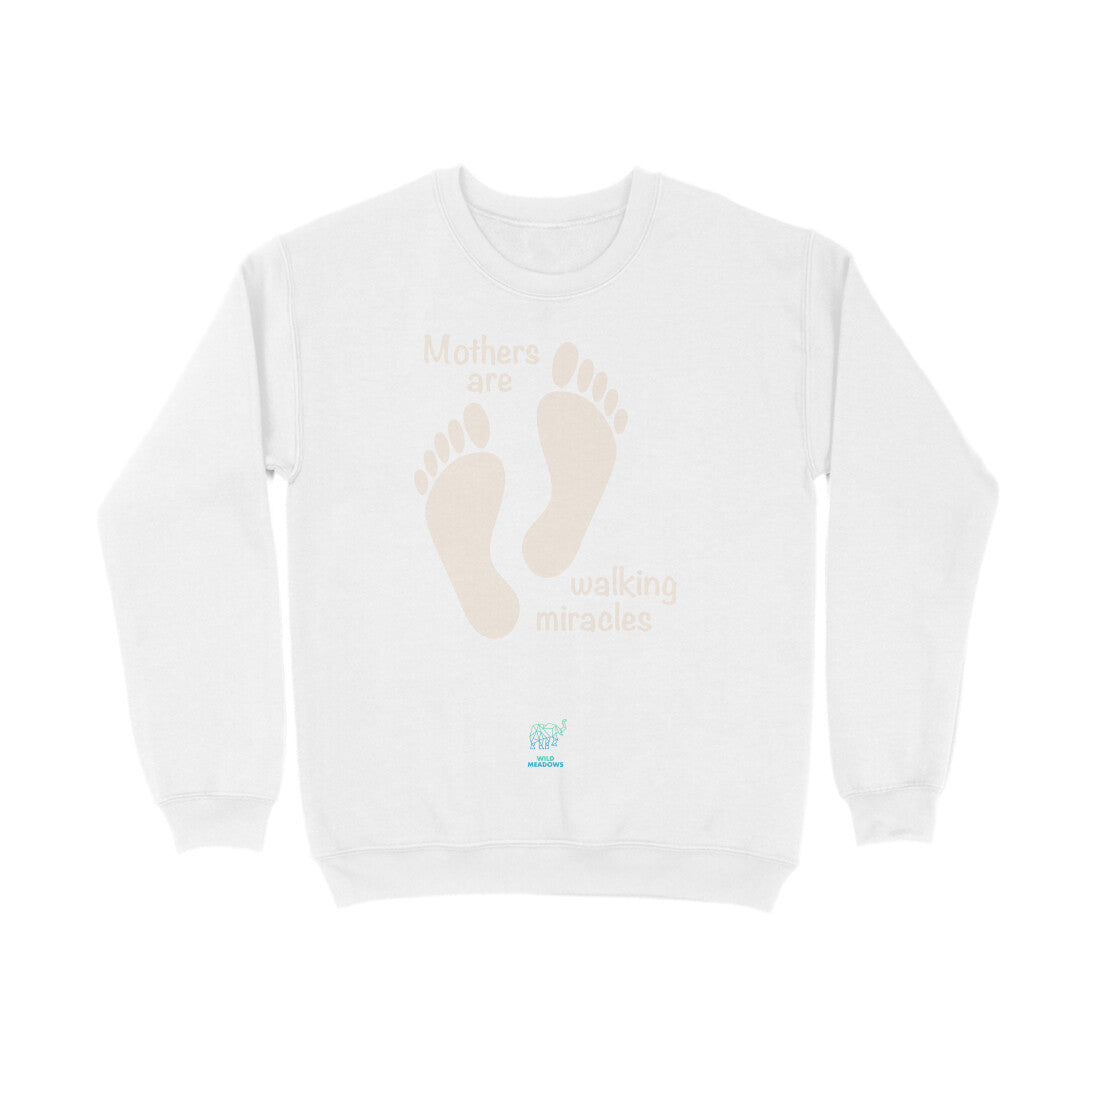 Mothers are walking miracles- Unisex Sweatshirt